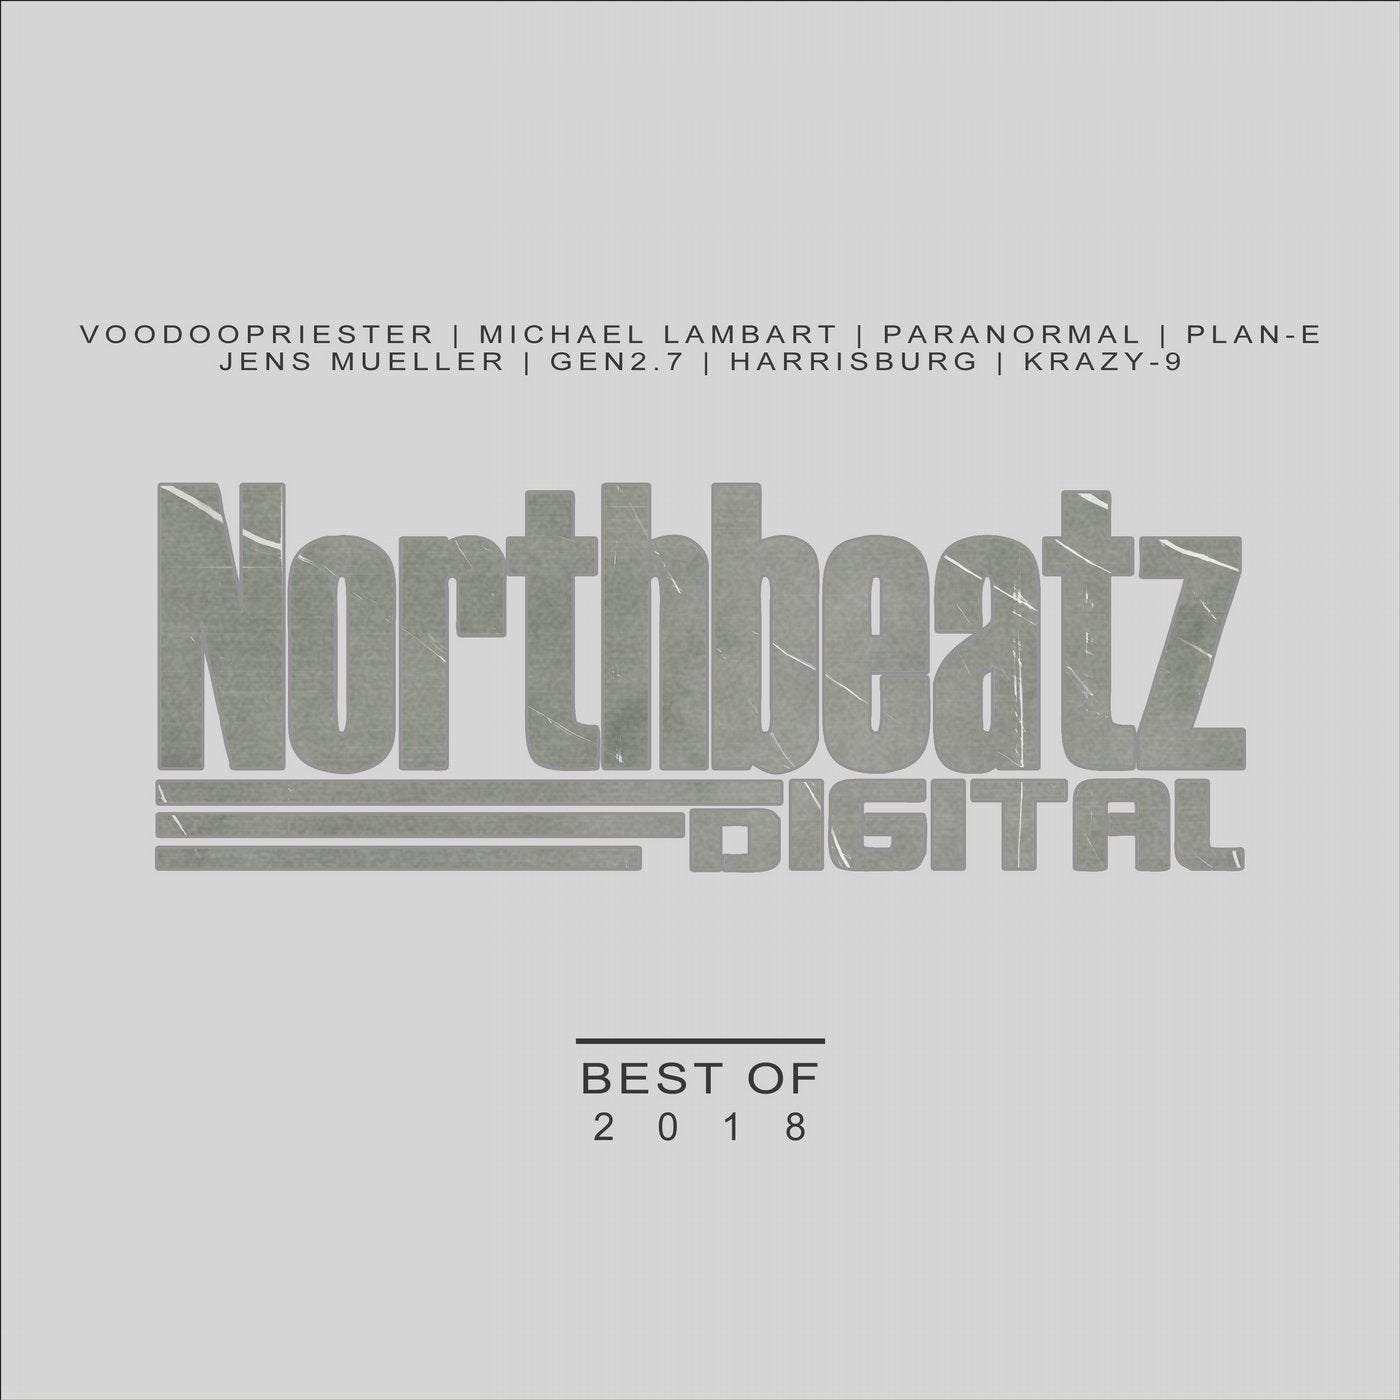 Krazy-9 music download - Beatport